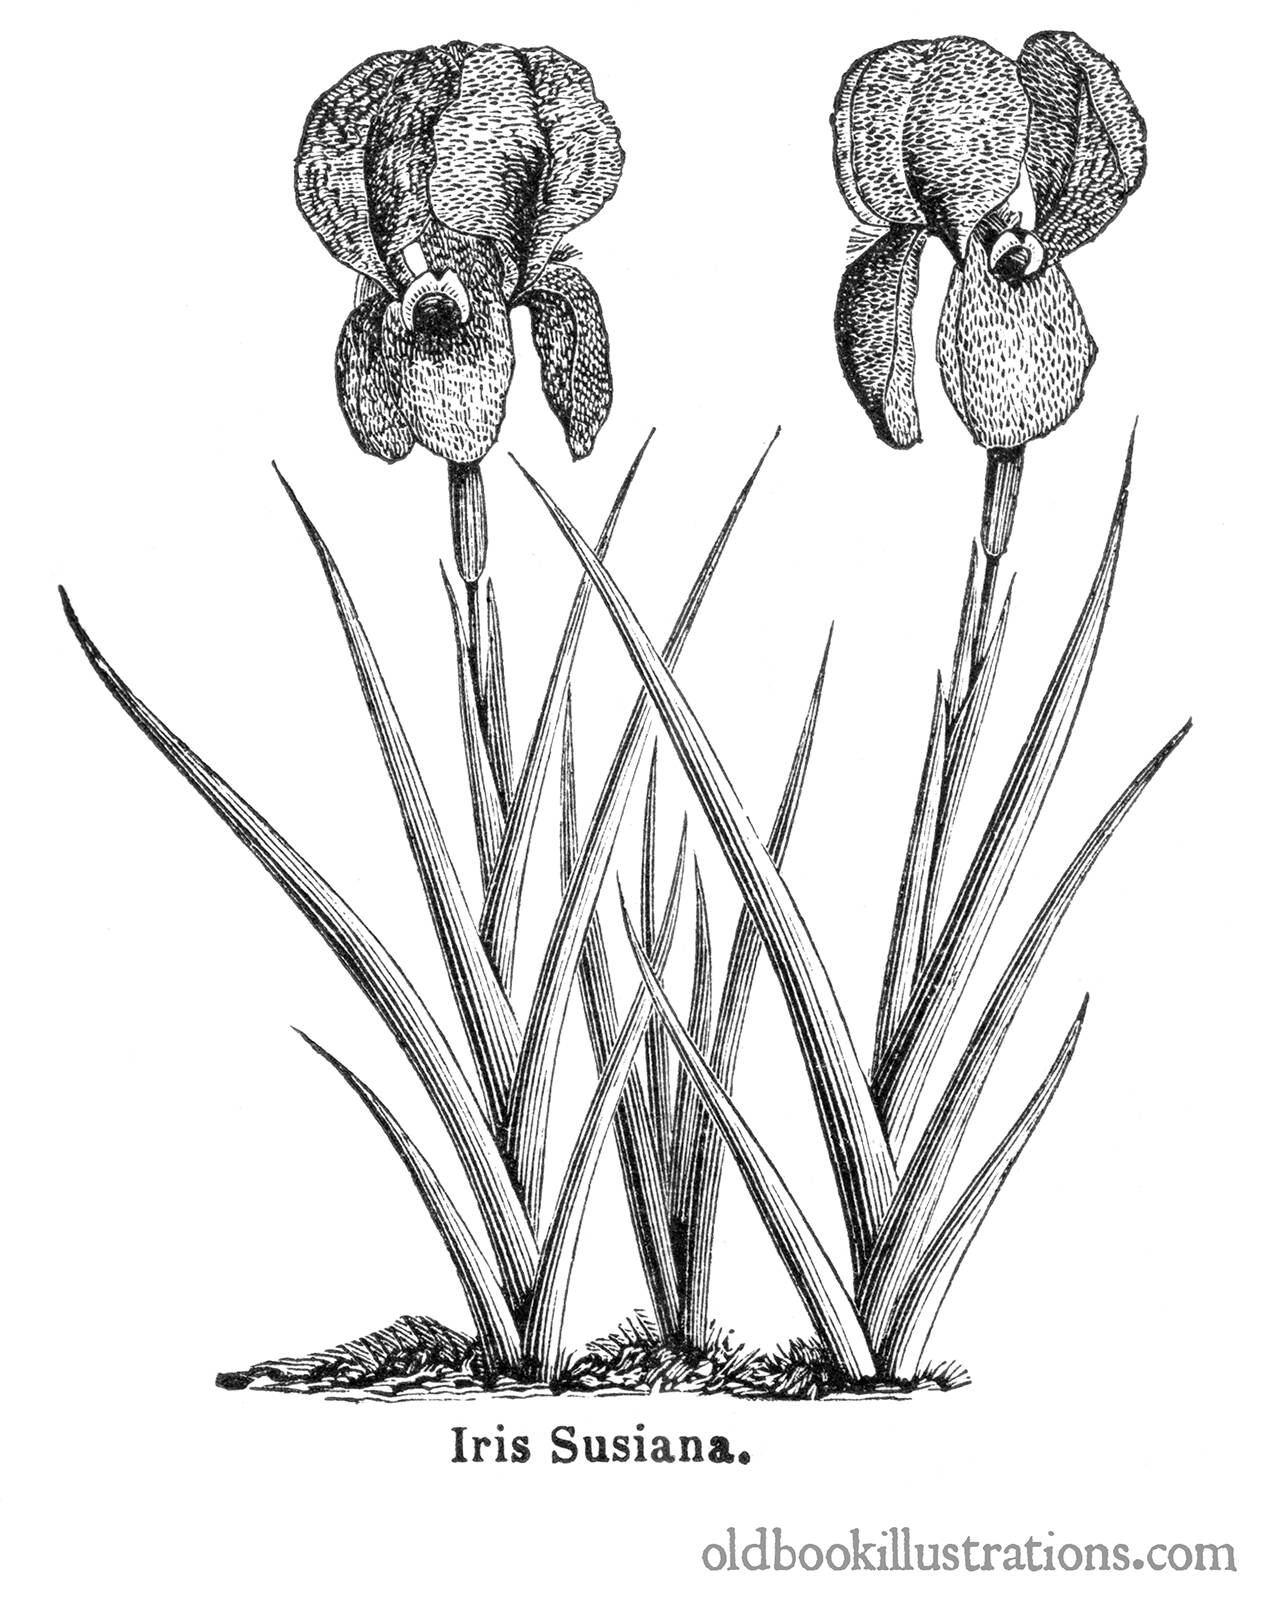 Iris susiana | Old Book Illustrations